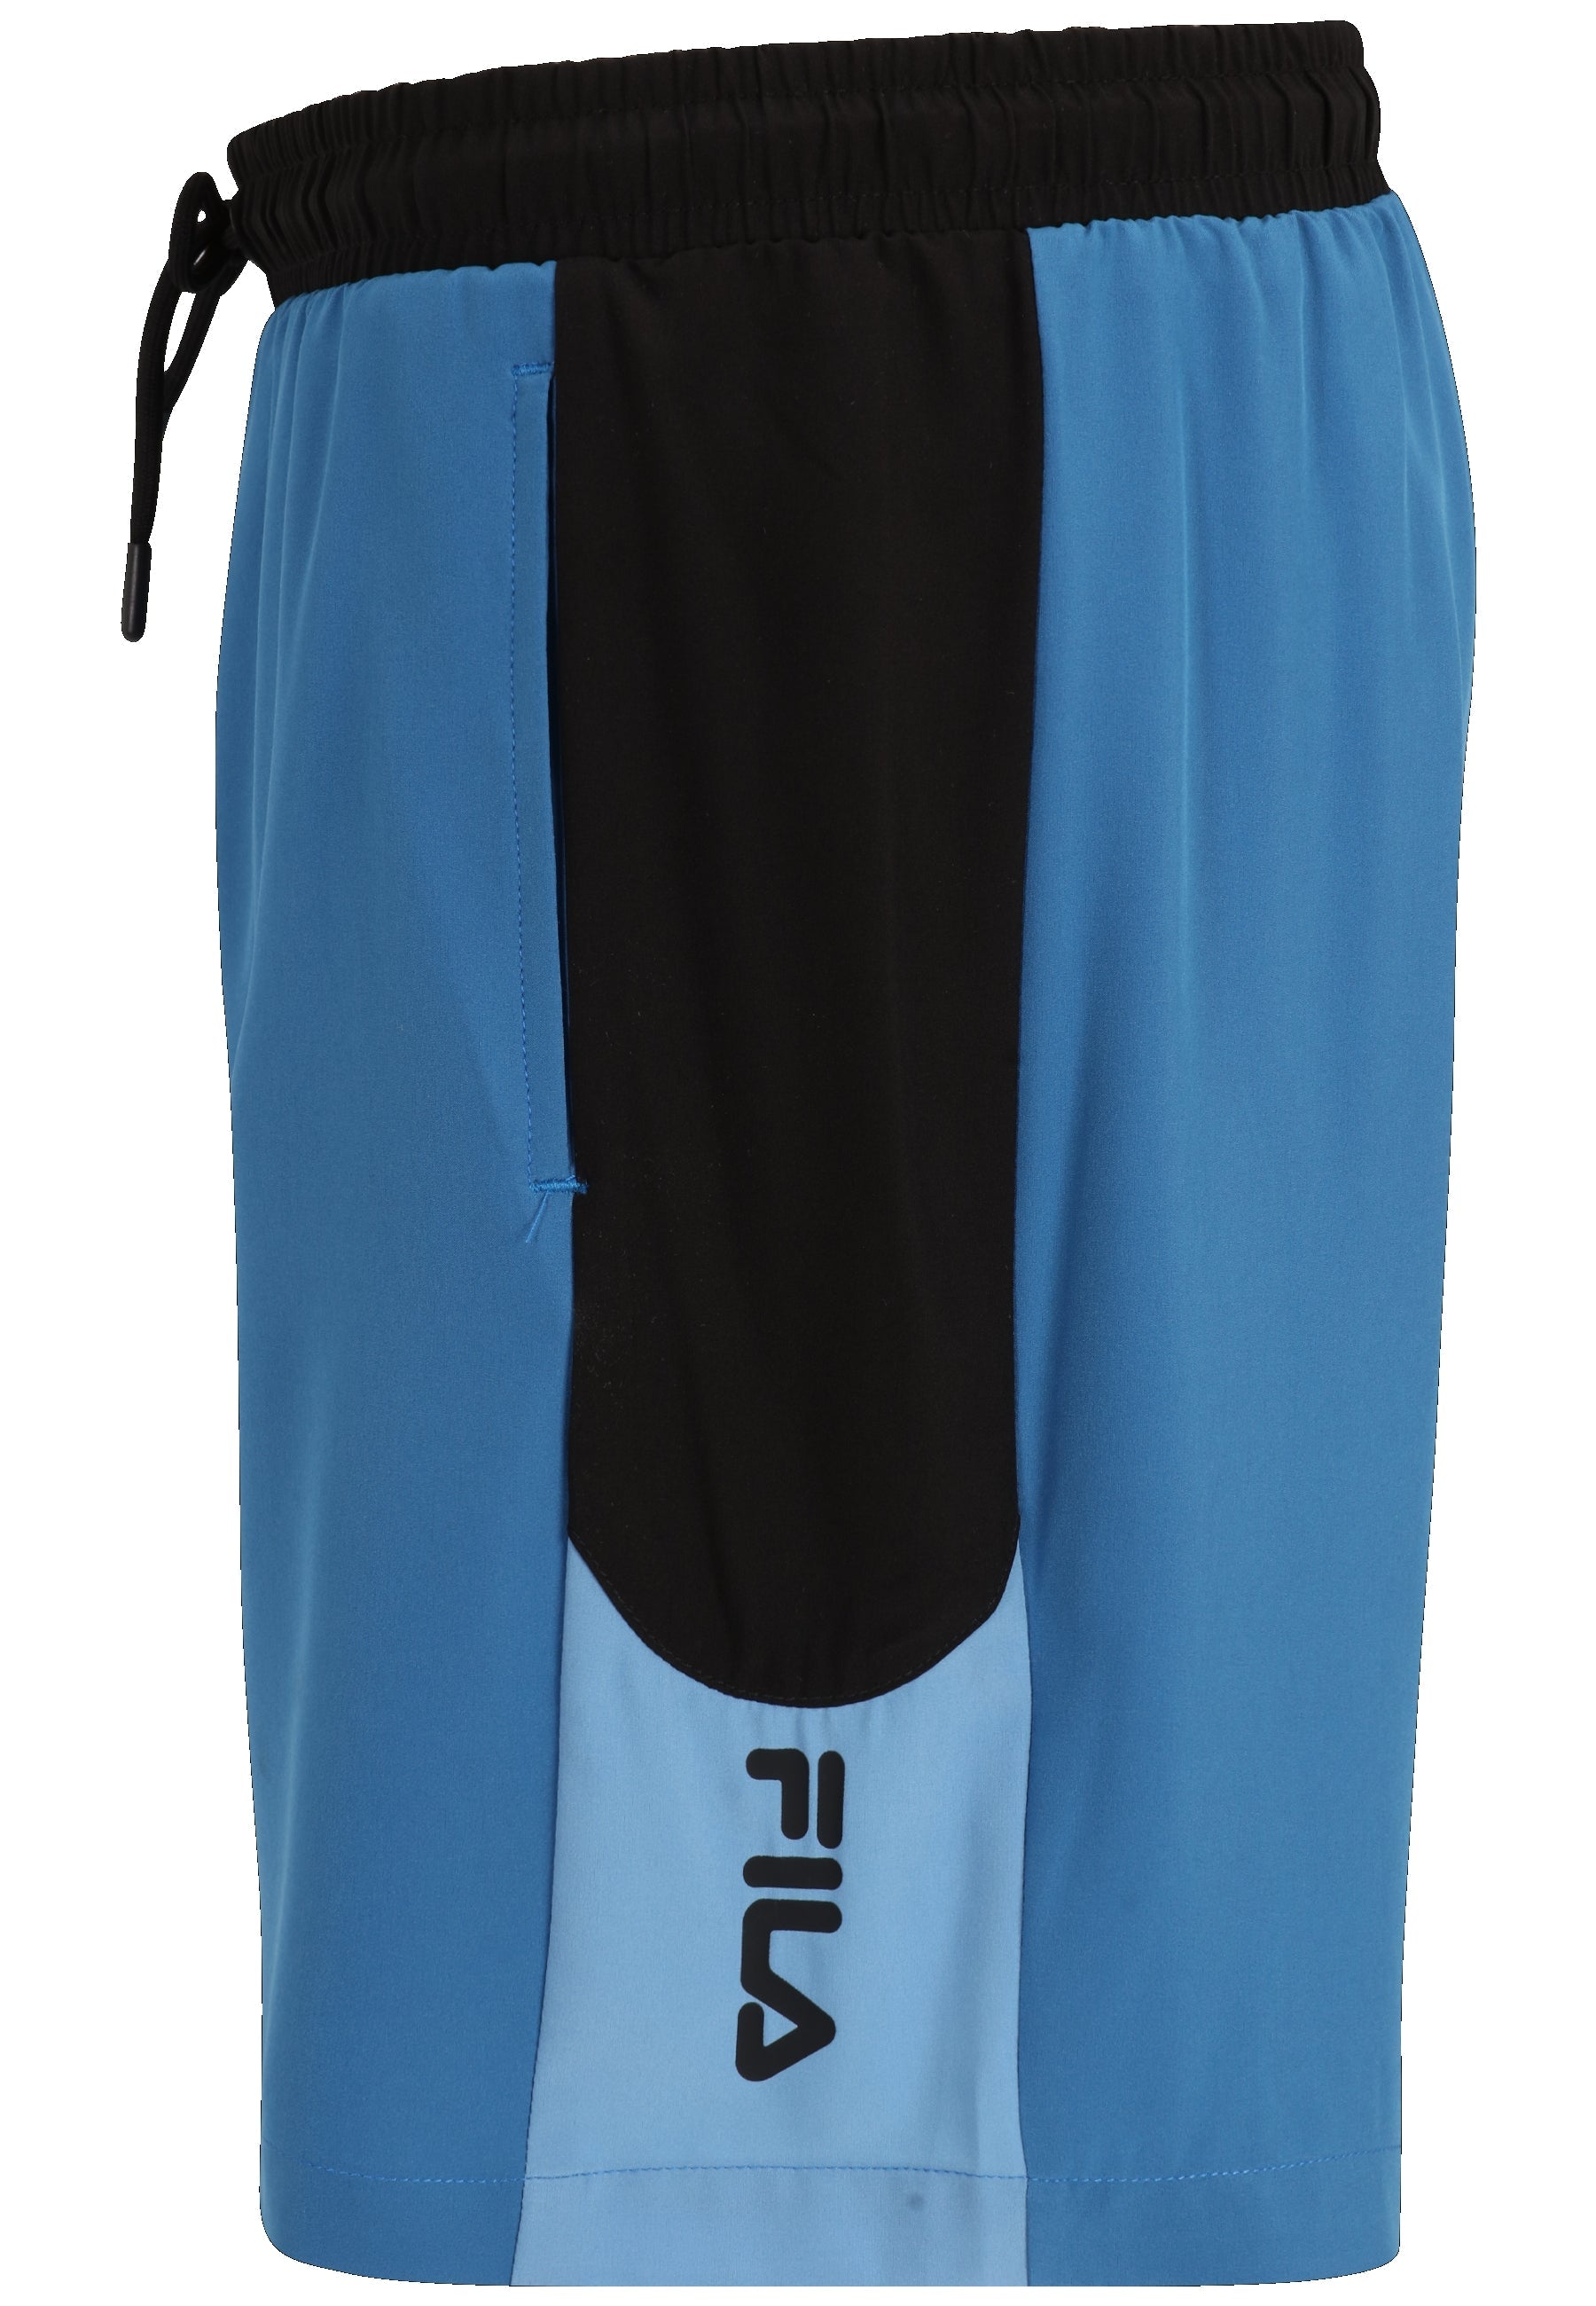 Sestu Swim Shorts in Vallarta Blue-Black-Lichen Blue Badehosen Fila   